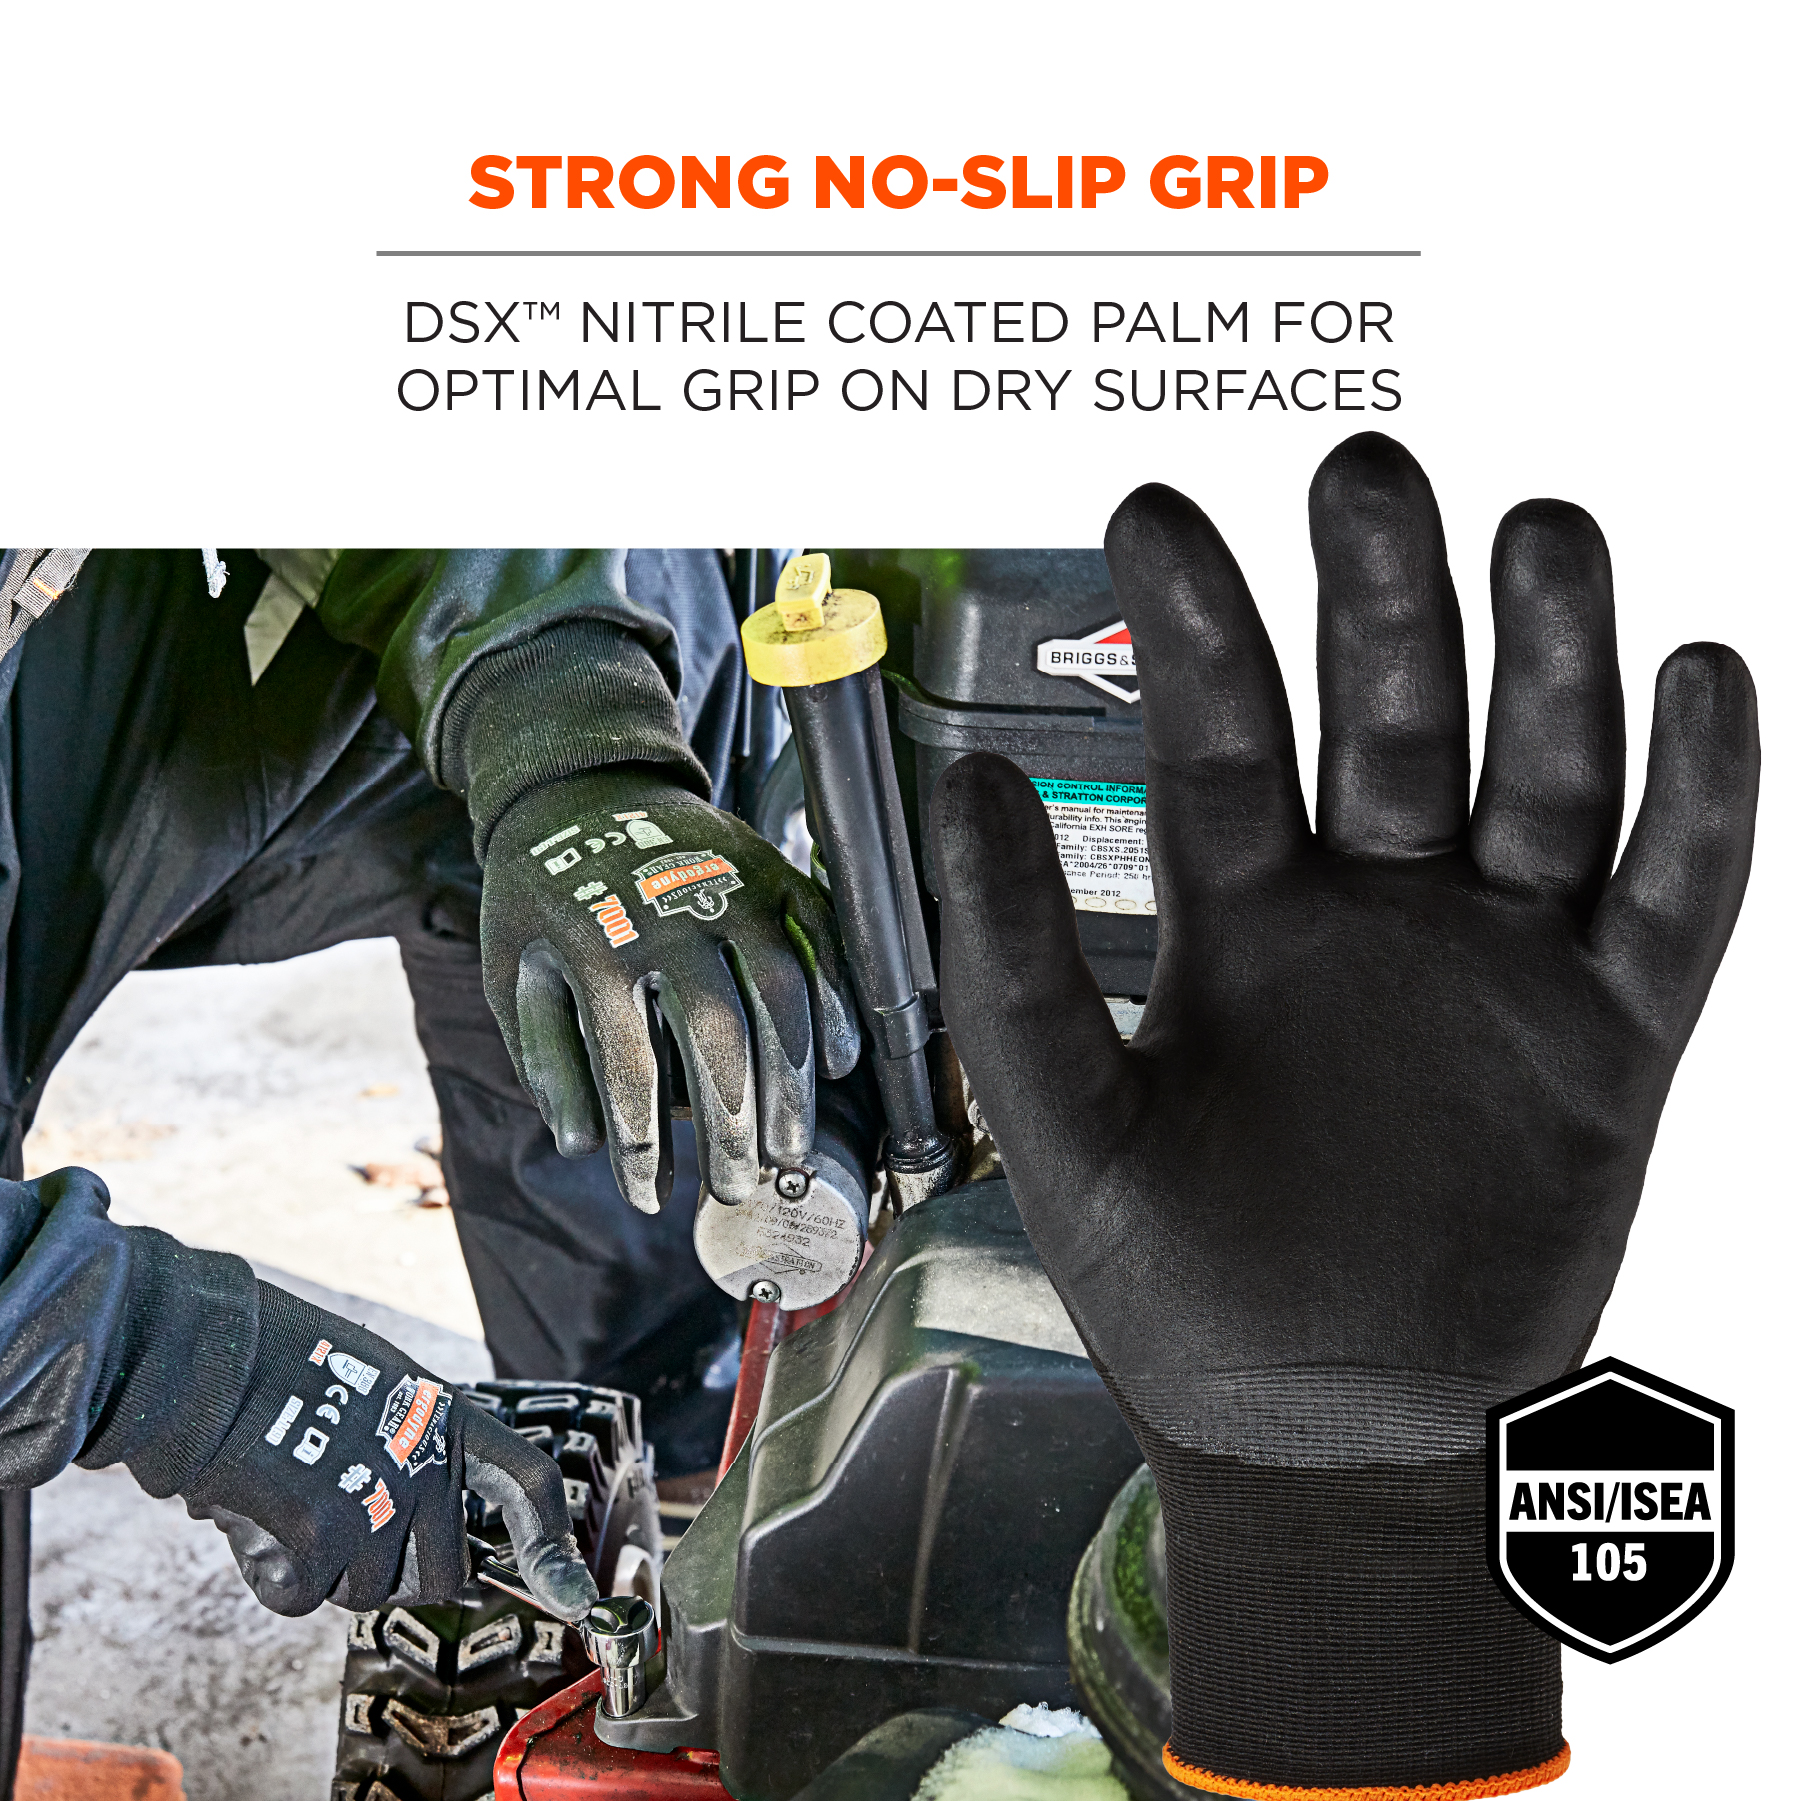 https://www.ergodyne.com/sites/default/files/product-images/17951-7001-nitrile-coated-gloves-strong-no-slip-grip_0.jpg